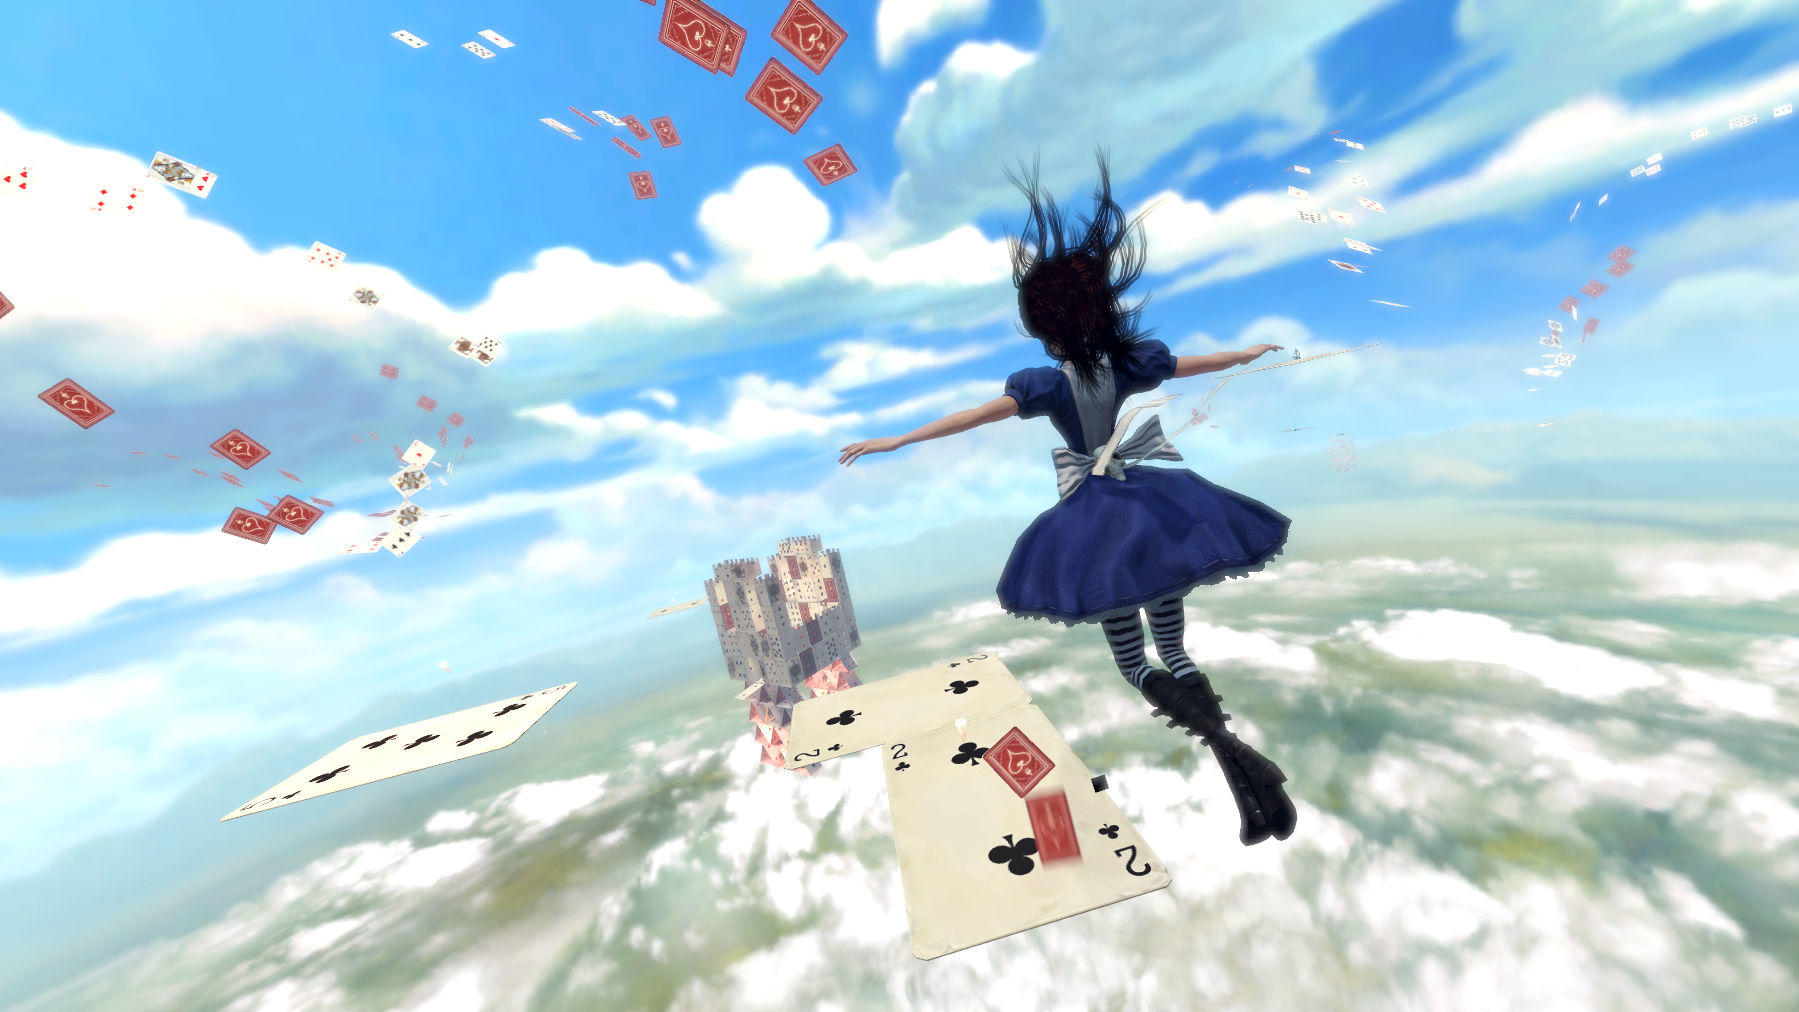 Screenshot 1 of Alice: ရူးသွပ်မှုပြန်လာတယ်။ 